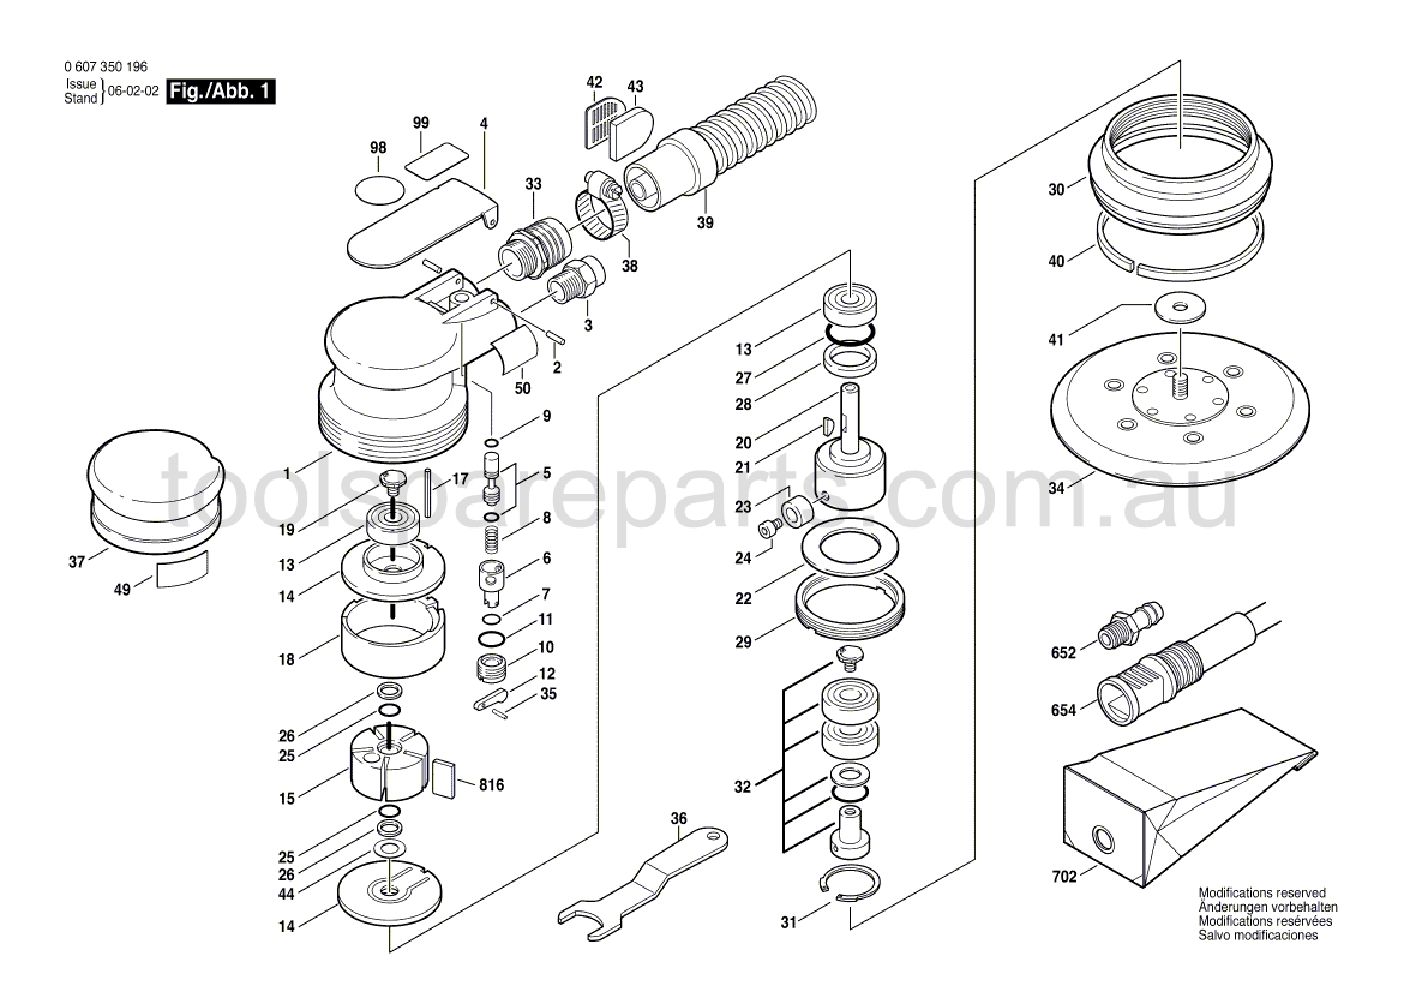 Bosch 170 WATT-SERIE 0607350196  Diagram 1